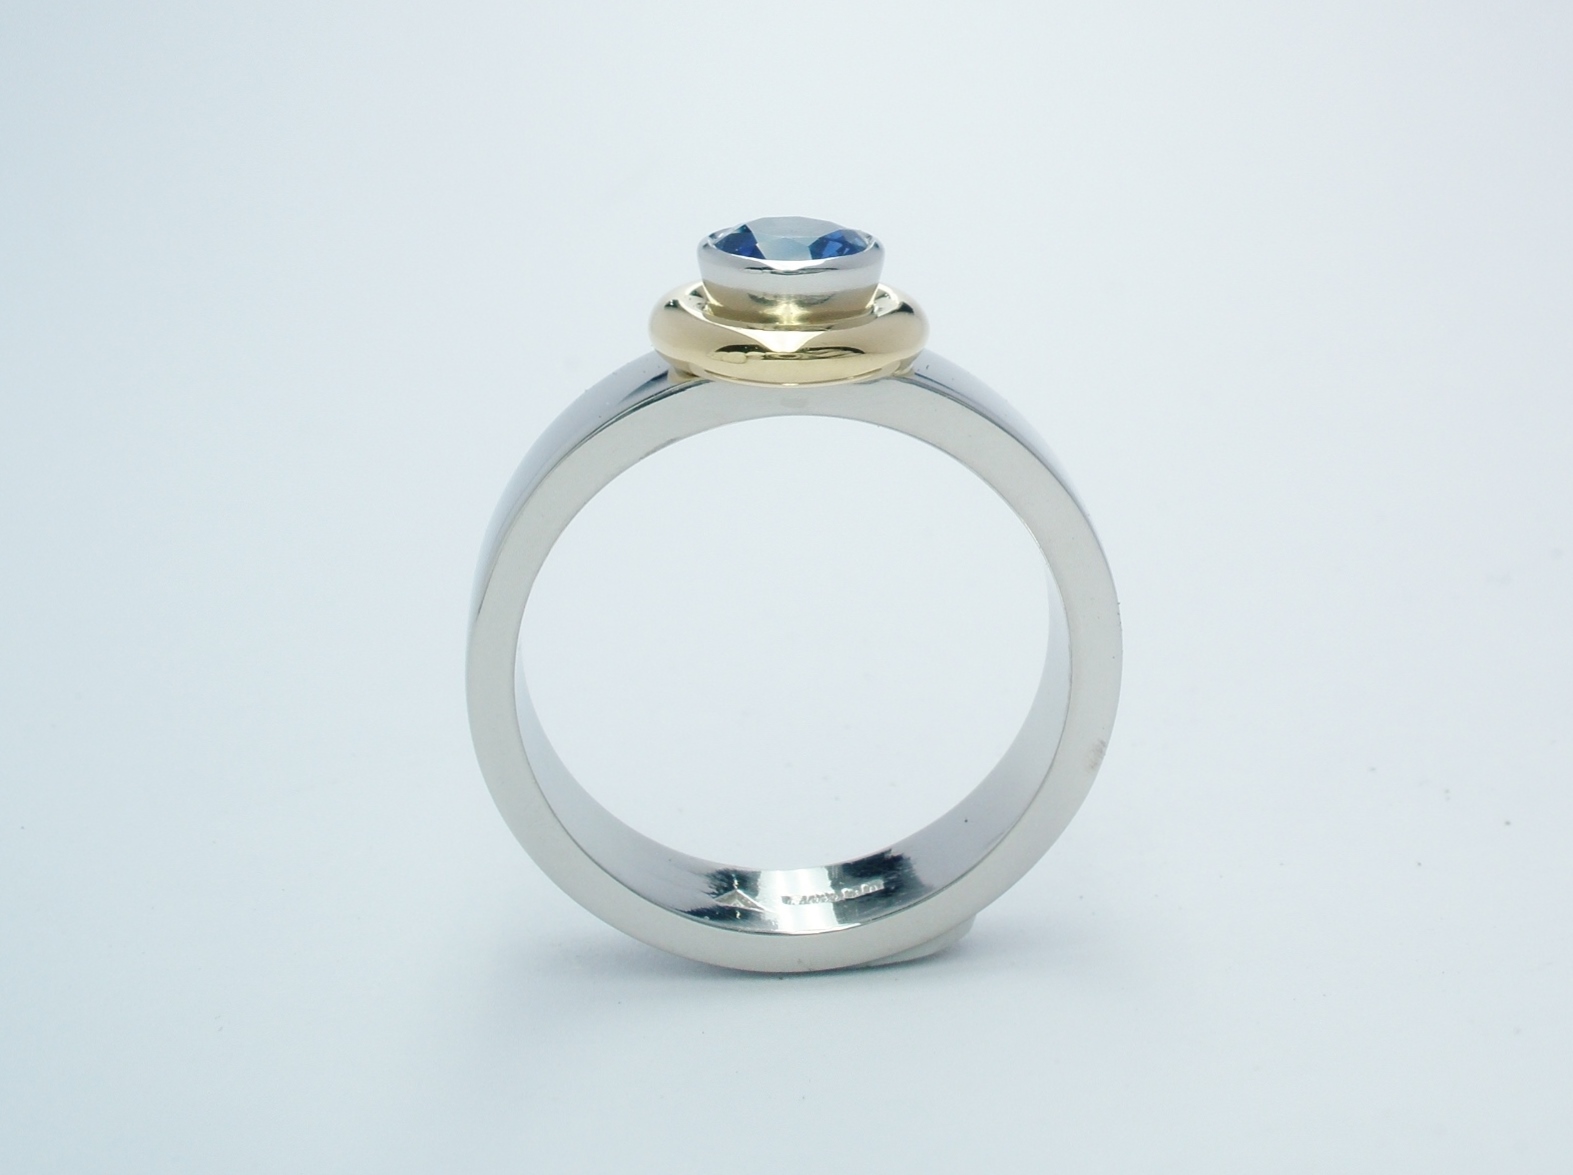 Round sapphire 'doughnut' style ring mounted in palladium, 18ct. yellow gold & platinum.